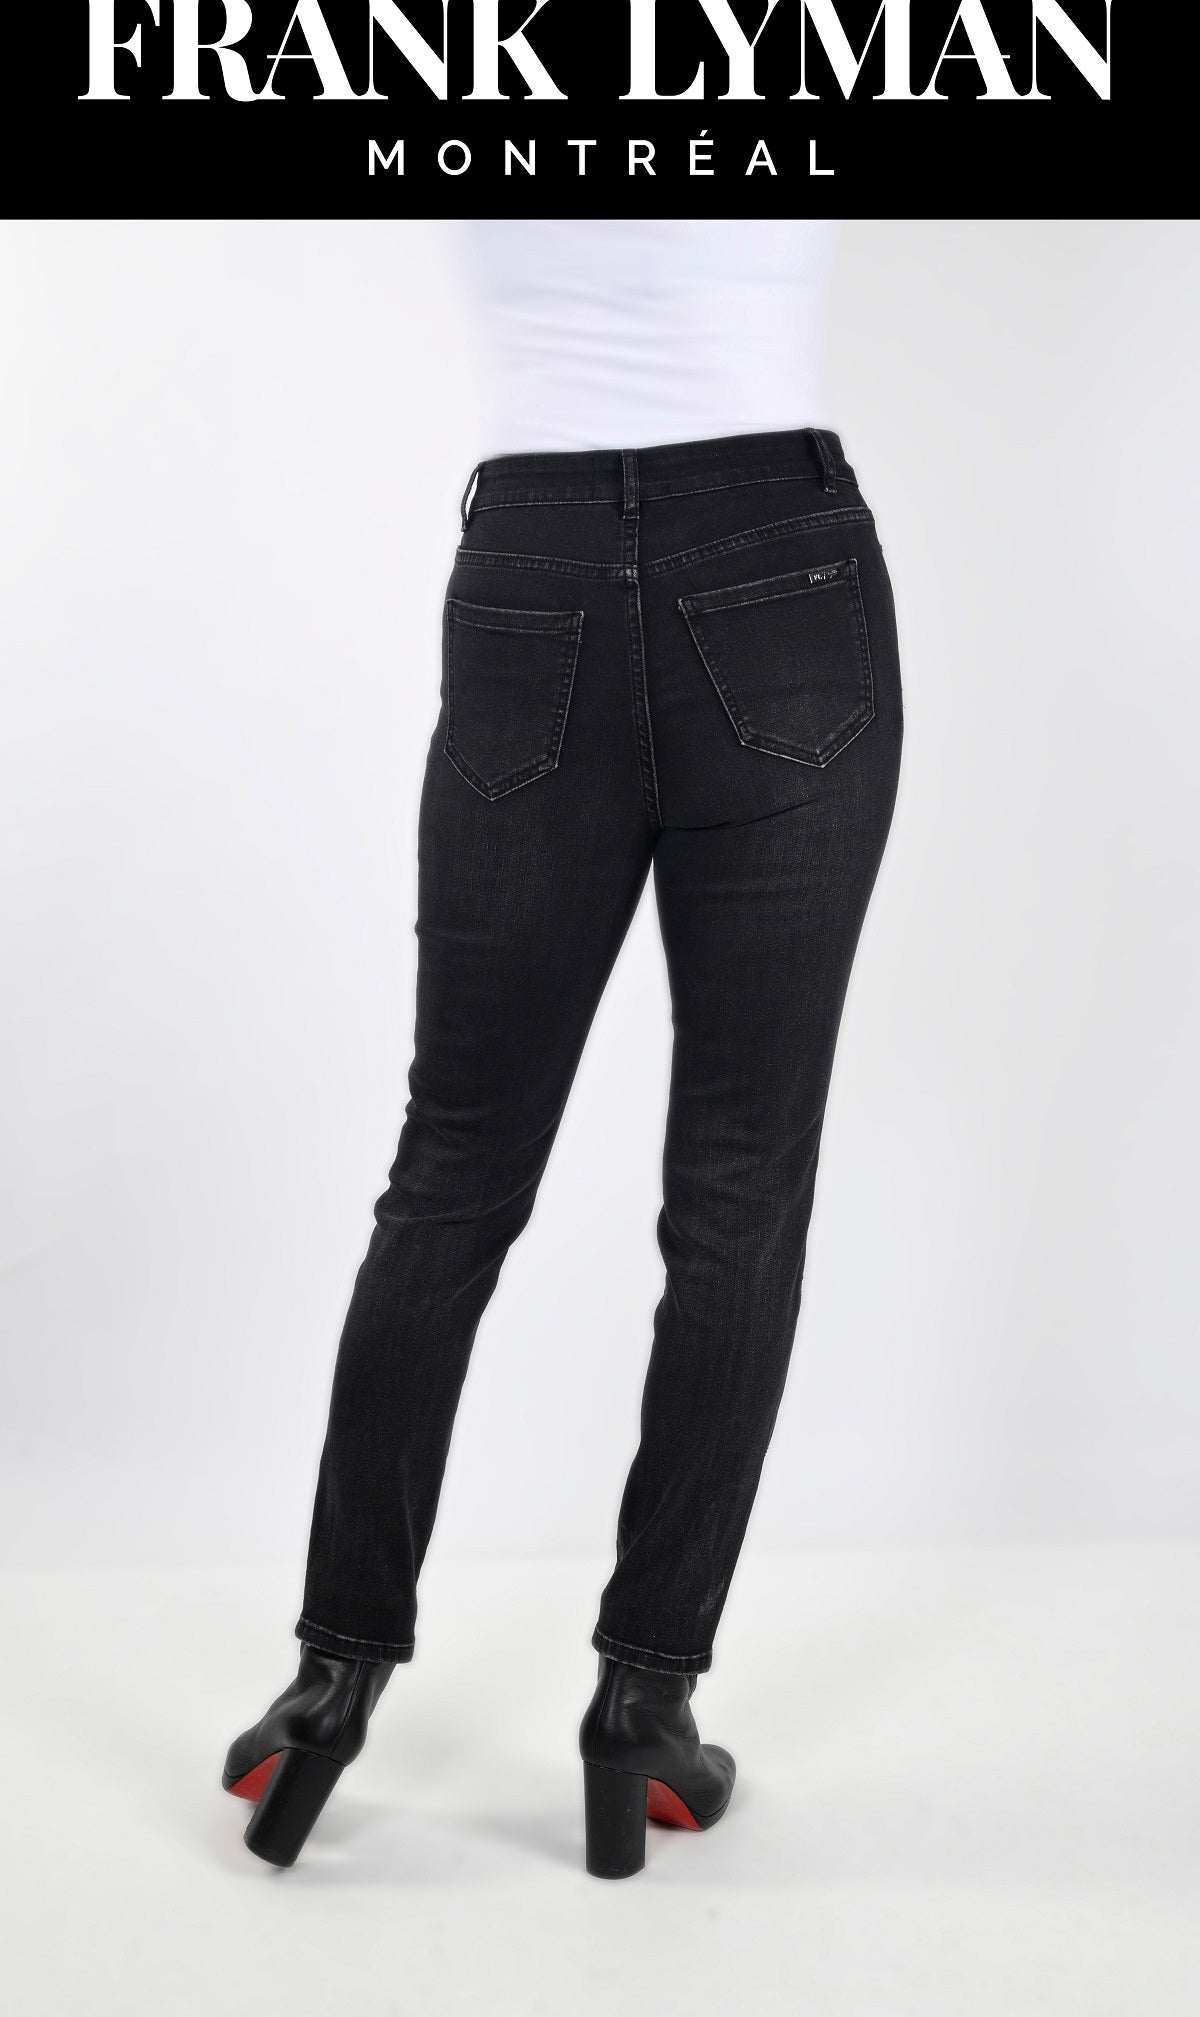 Frank Lyman Montreal Black Sequin Jeans